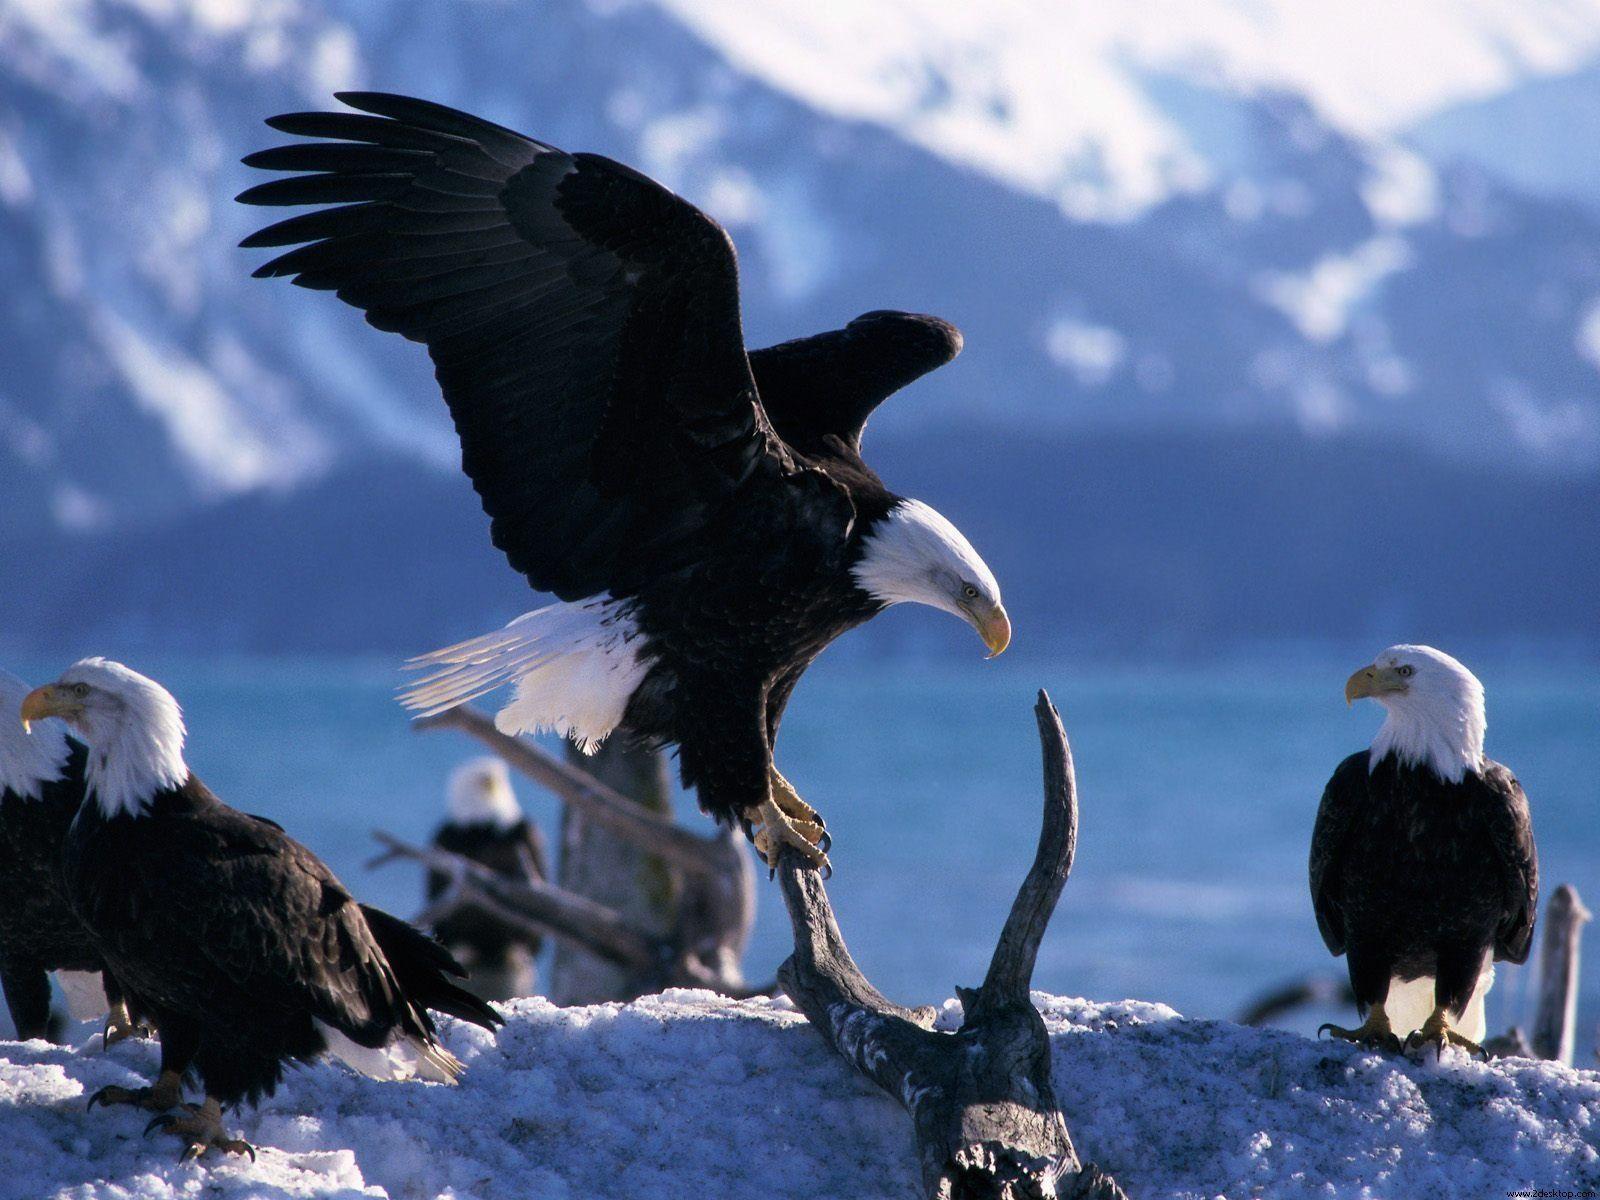 Bald Eagle Desktop Wallpaper. Bald Eagle Birds Wallpaper. Cool